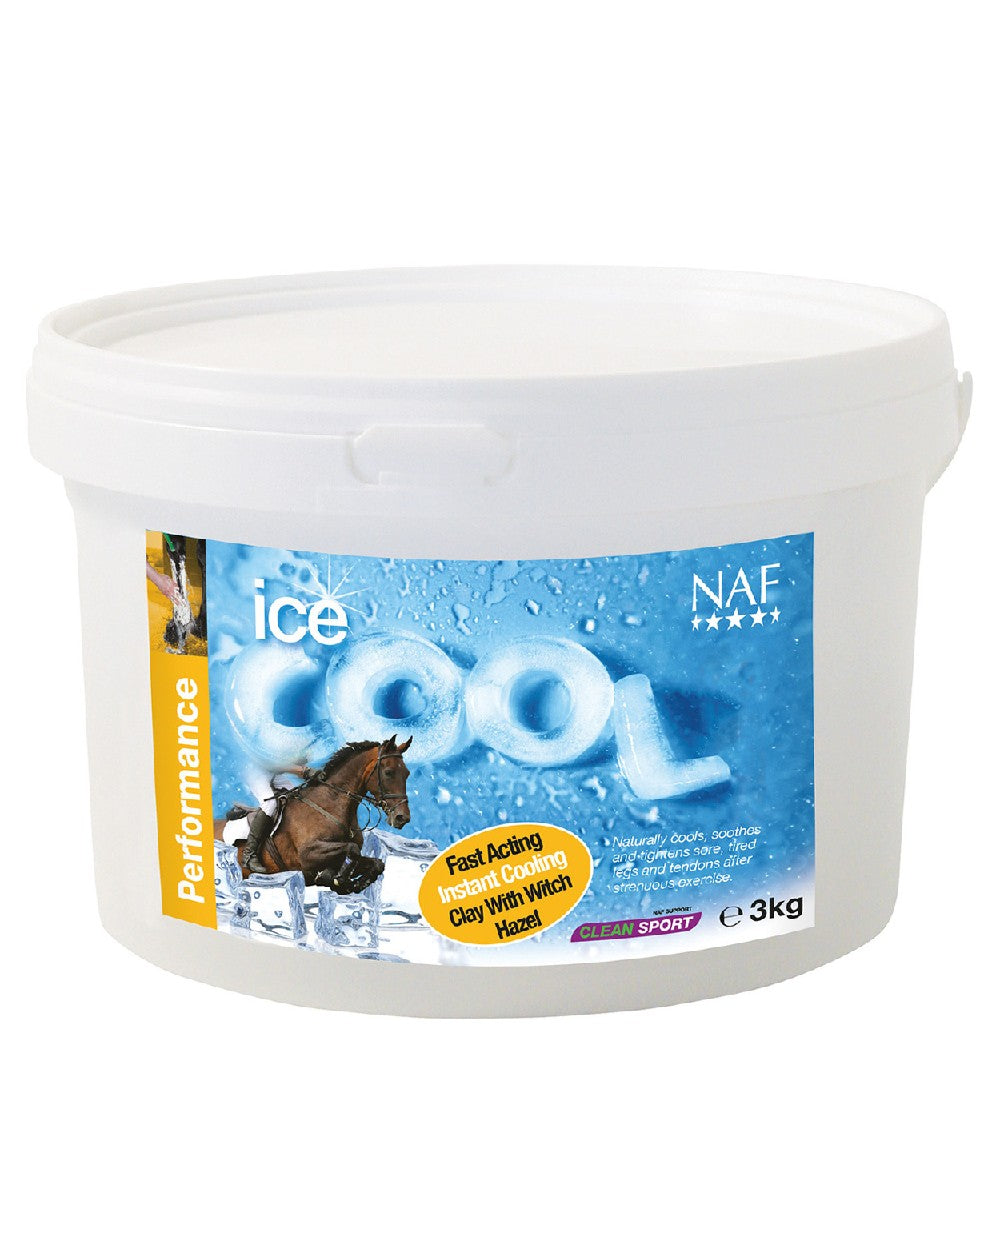 NAF Ice Cool 3kg on white background